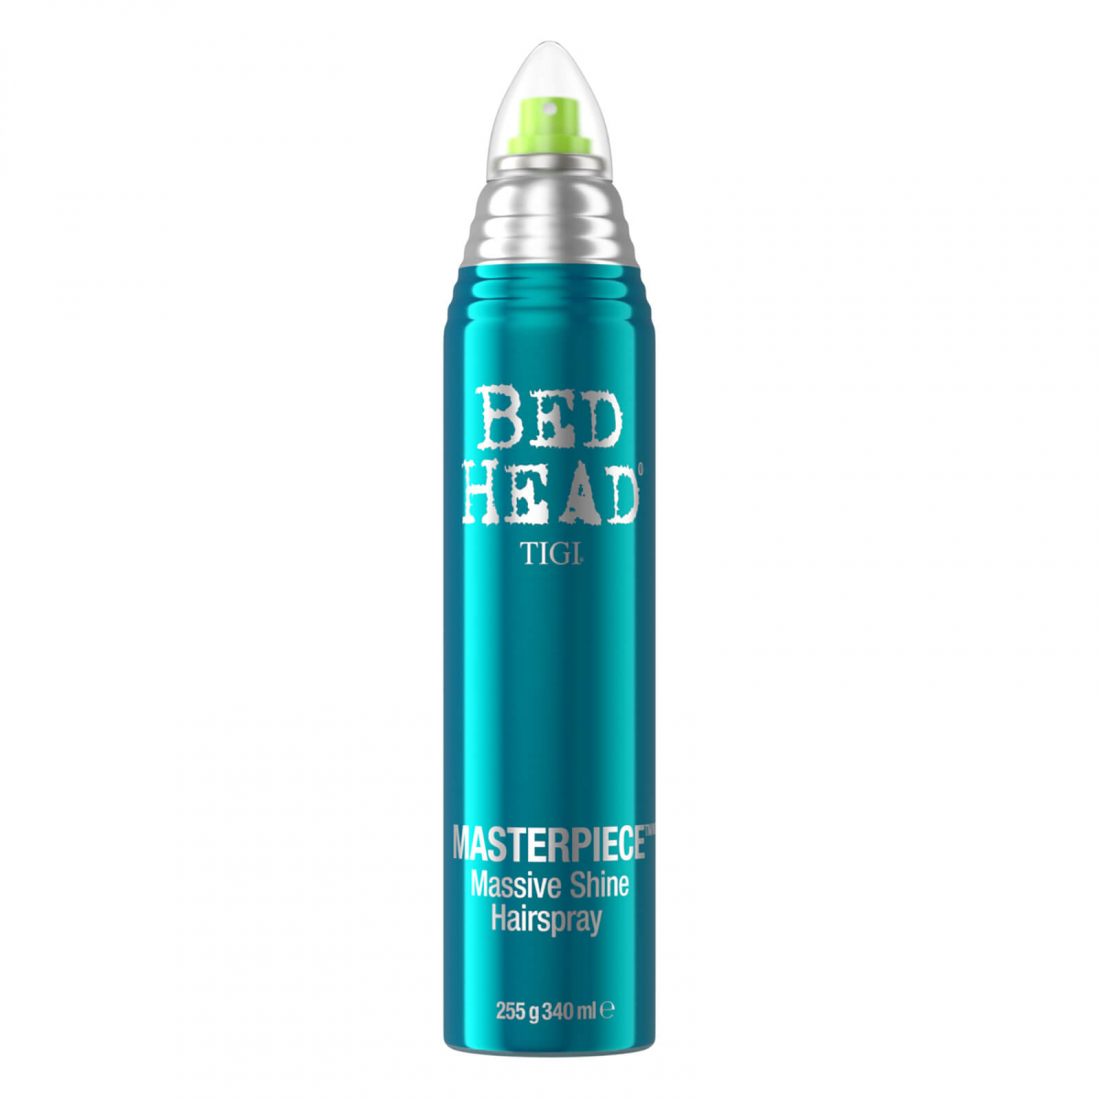 'Bed Head Masterpiece Massive Shine' Hairspray - 340 ml